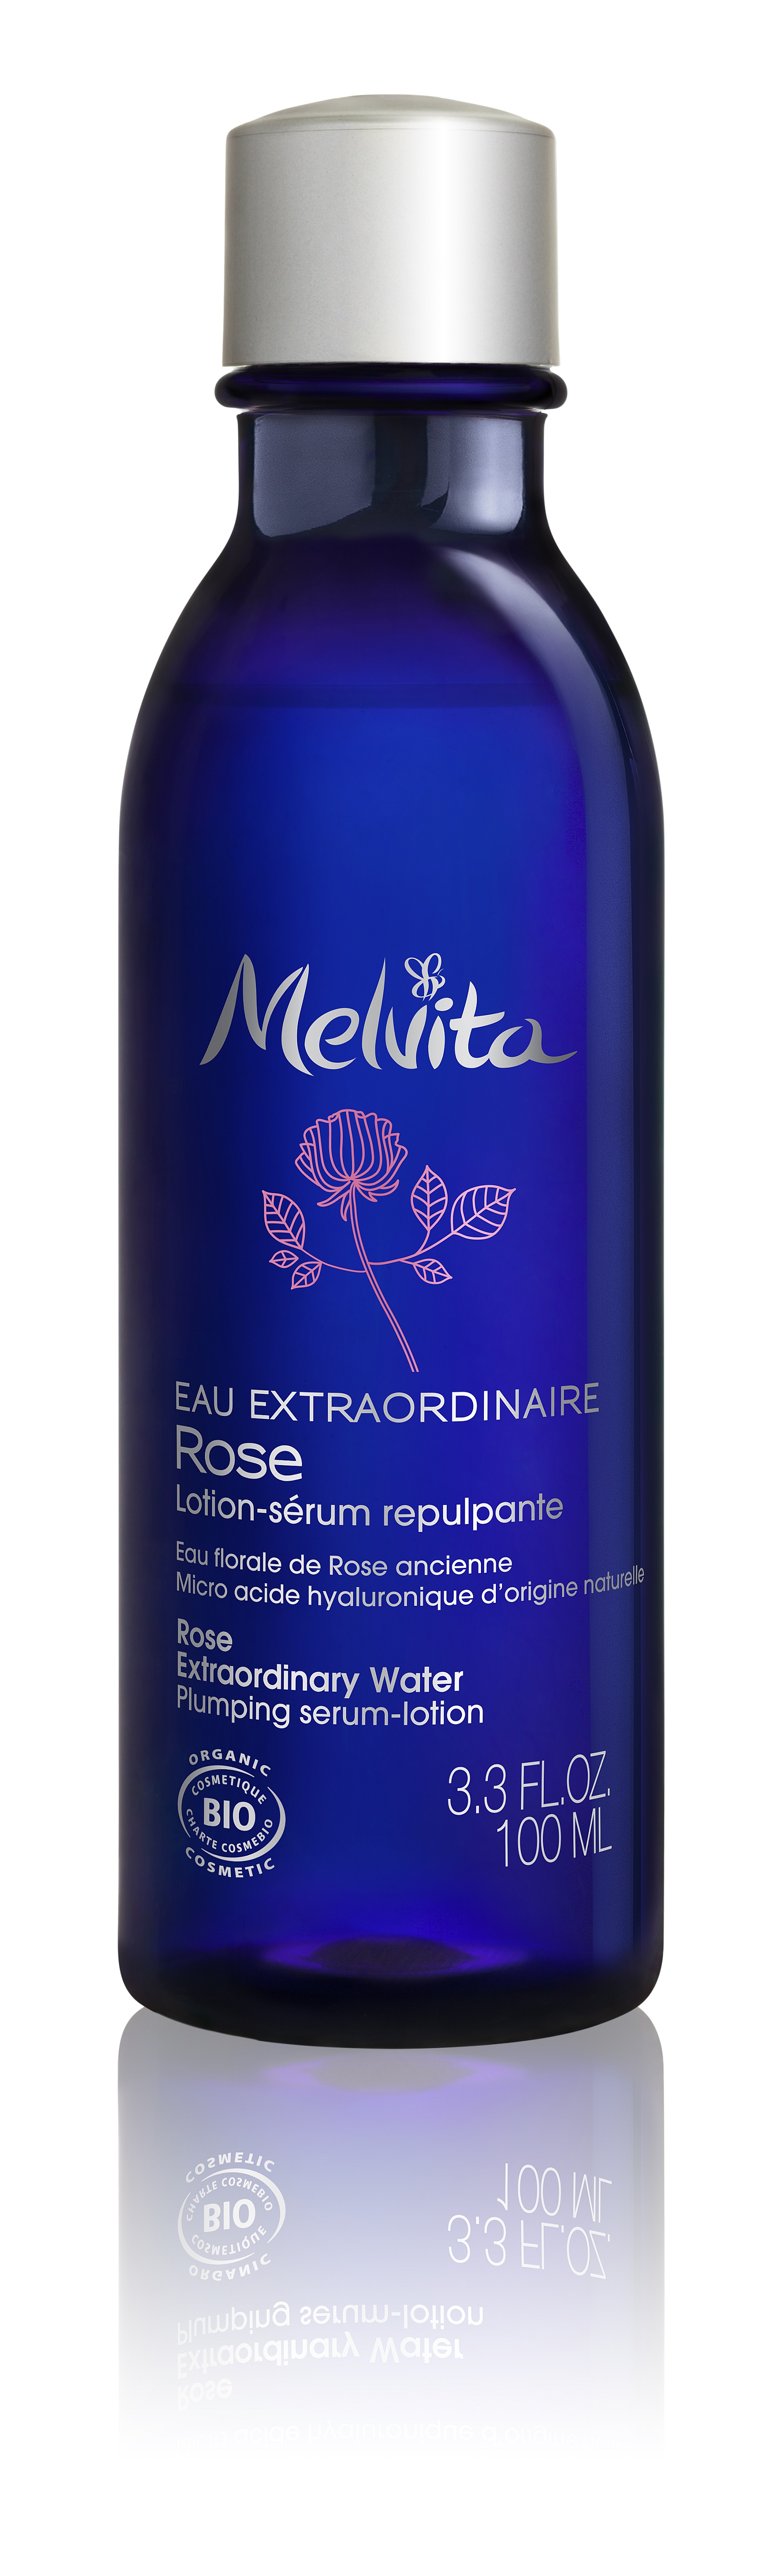 Melvita Rose Extraordinary Water Plumping Serum-Lotion-Pamper.my